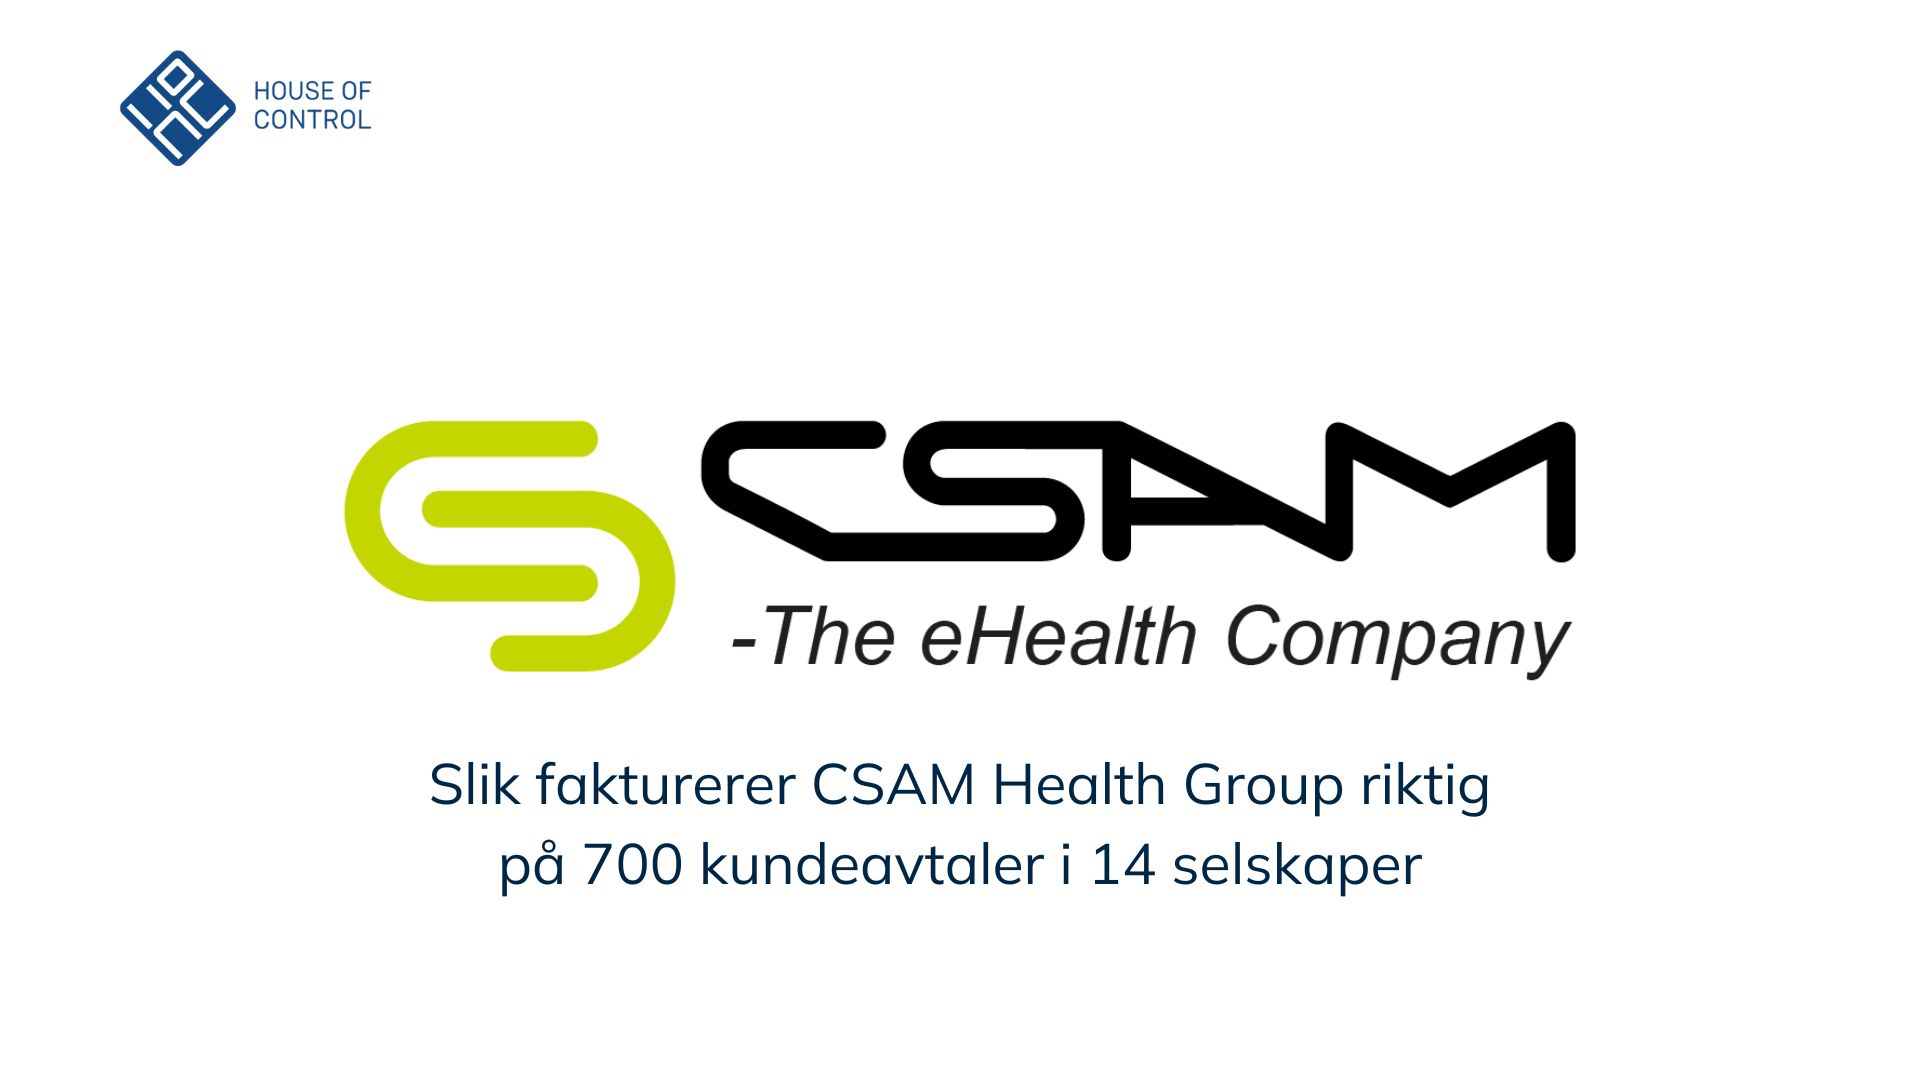 CSAM Health Group case study